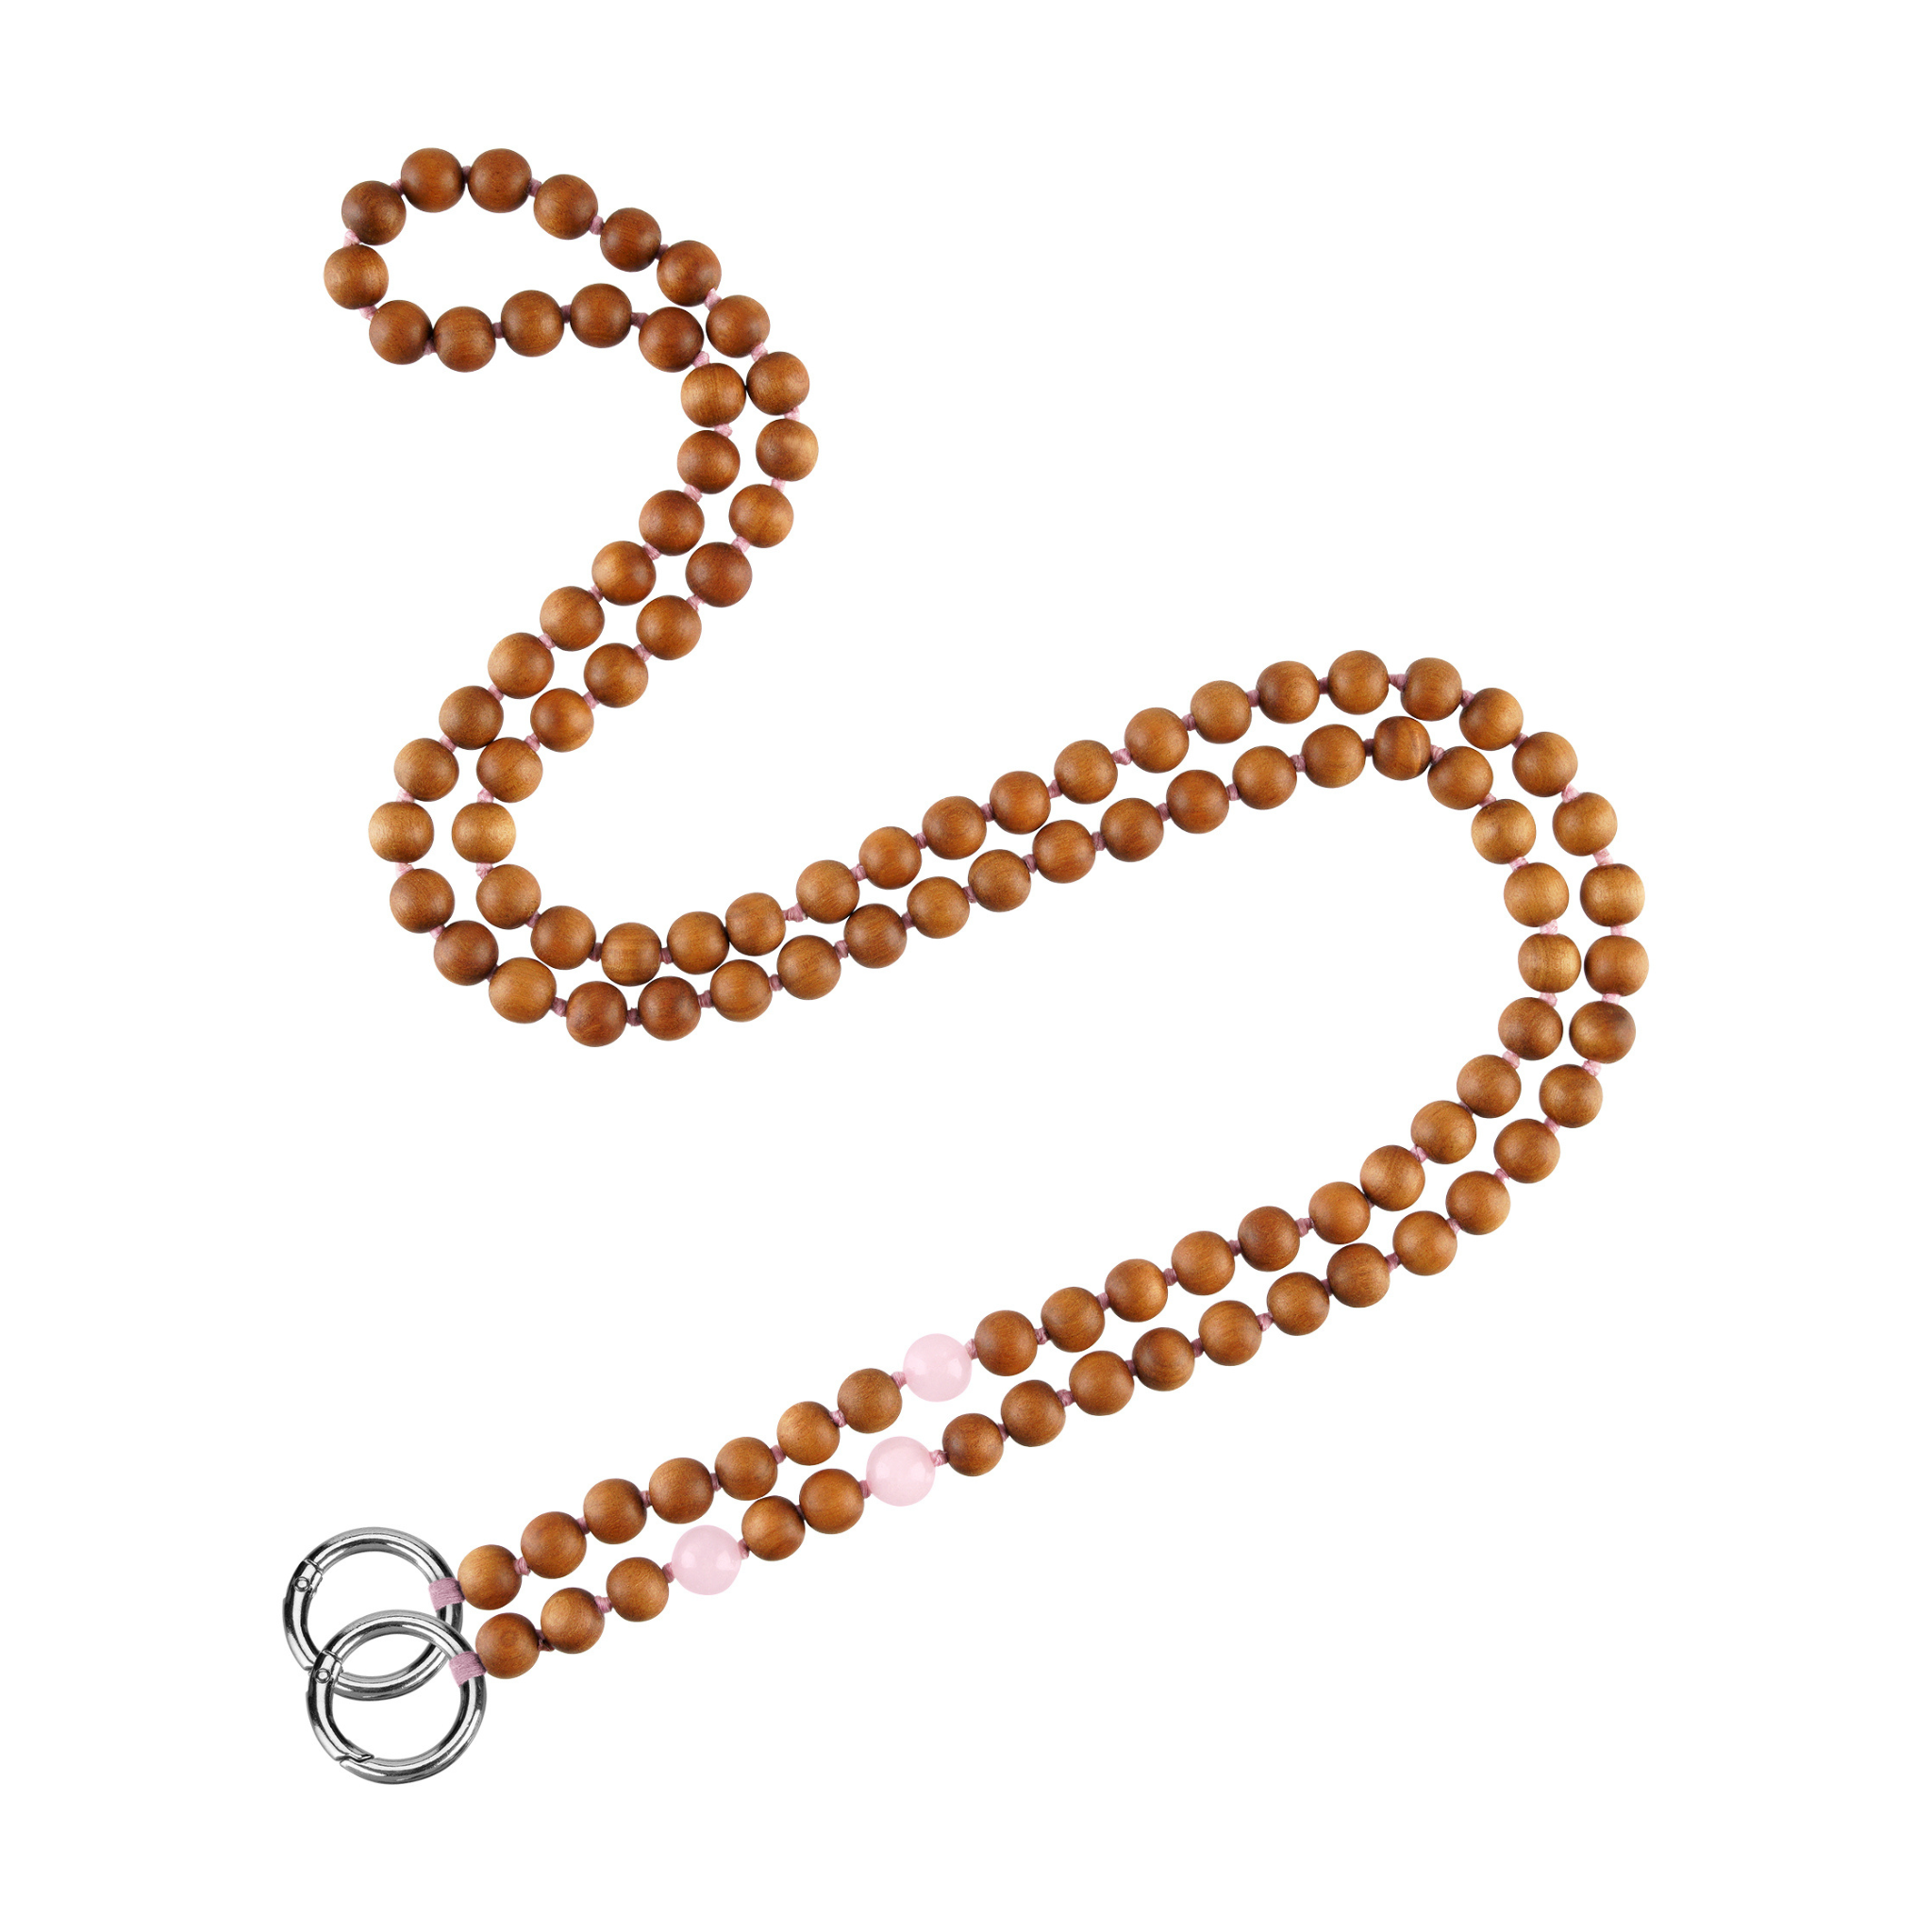 Mala Handykette aus Rosenquarz Perlen und Sandelholz Kugeln. Crossbodykette. 1,10 cm lang.